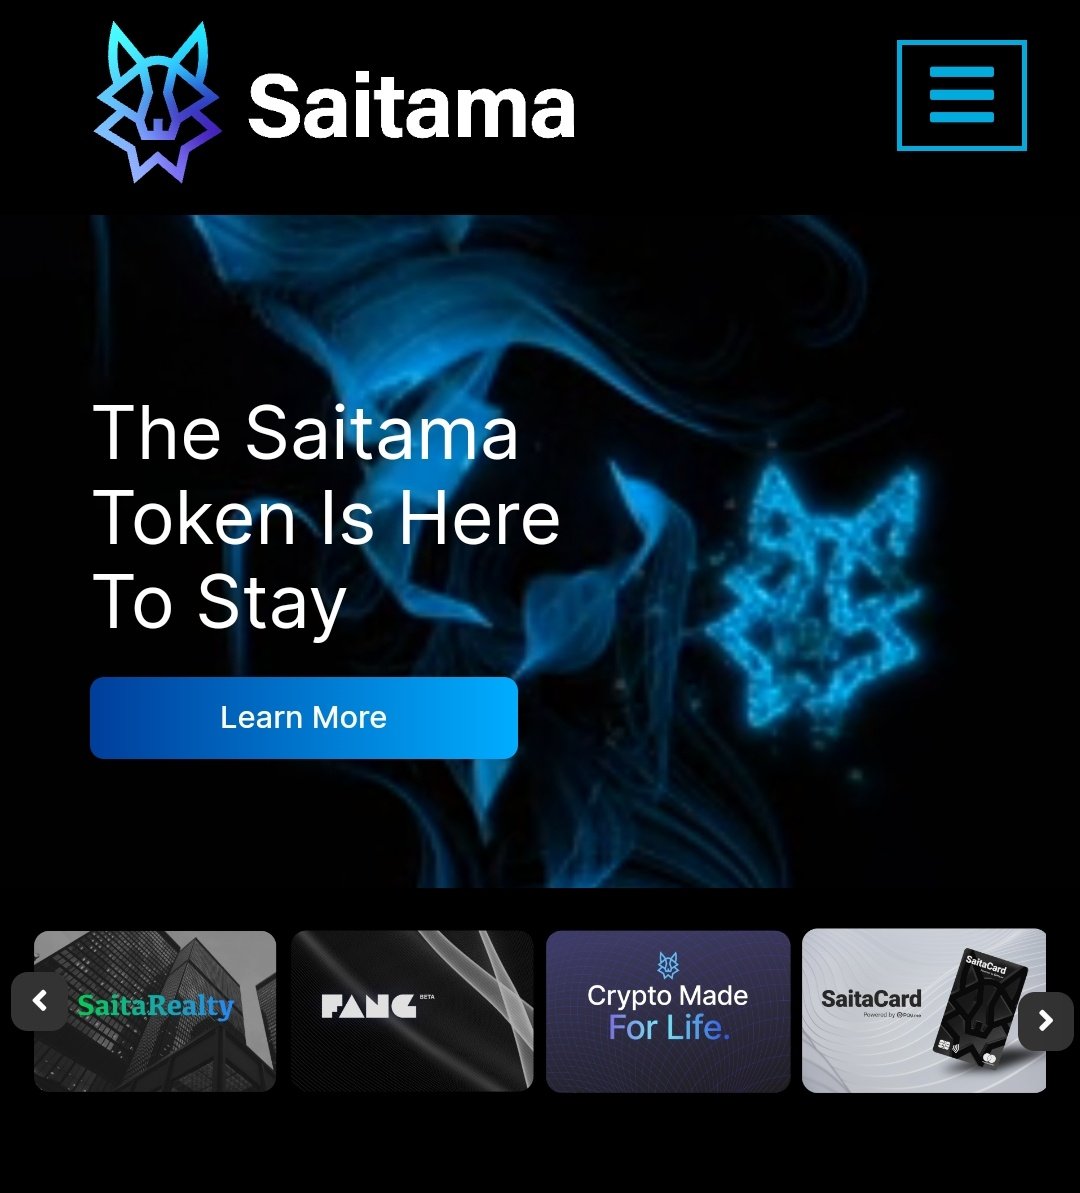 The #Saitama Website is now LIVE with its completely new look using high definition animations and well detailed information. #SaitaCard #SaitaPro #SaitaRealty #Epayme #Crypto #DeFi #SaitaSwap

Have a look ➡️  saitamatoken.com